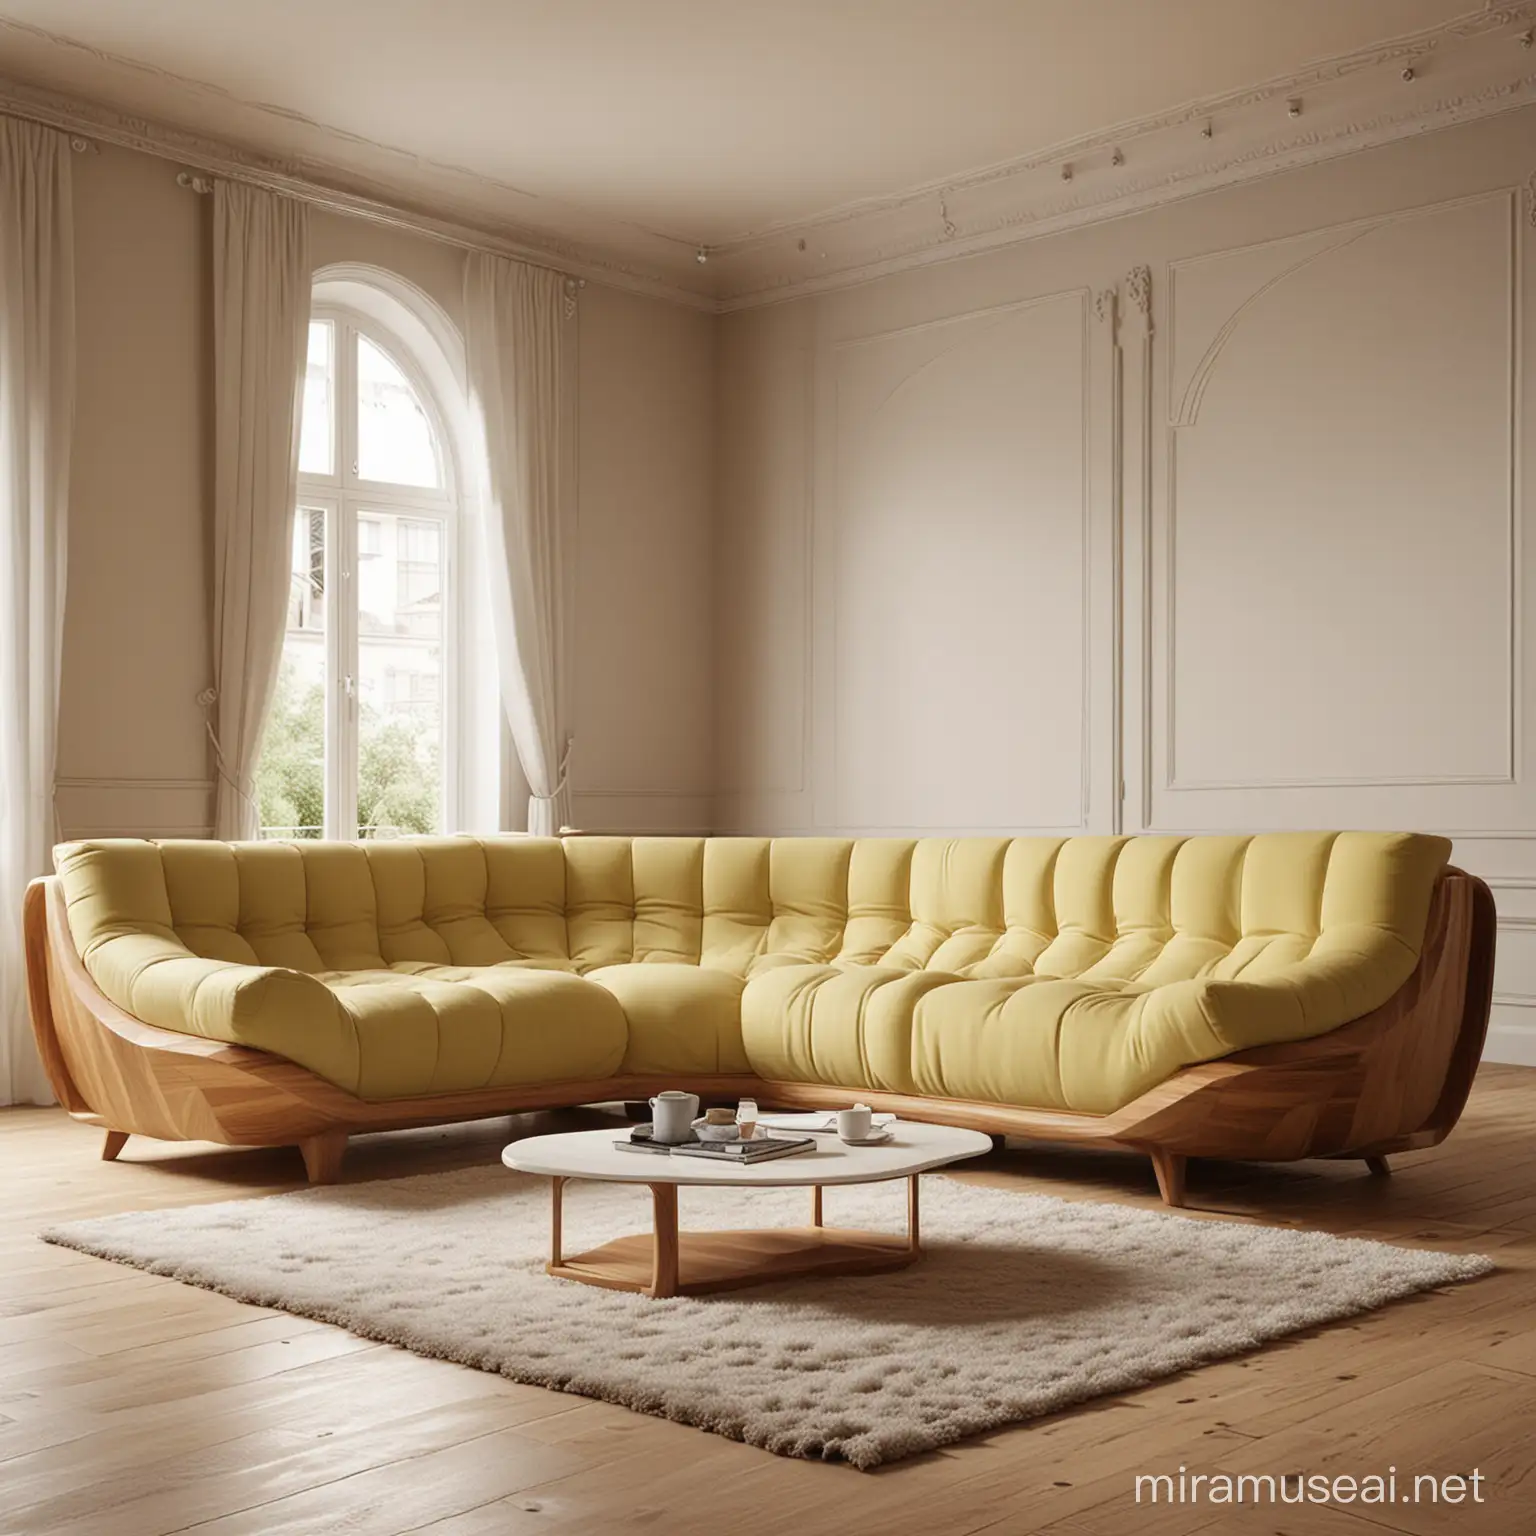 Futuristic Modular Sofa in Vibrant Living Space